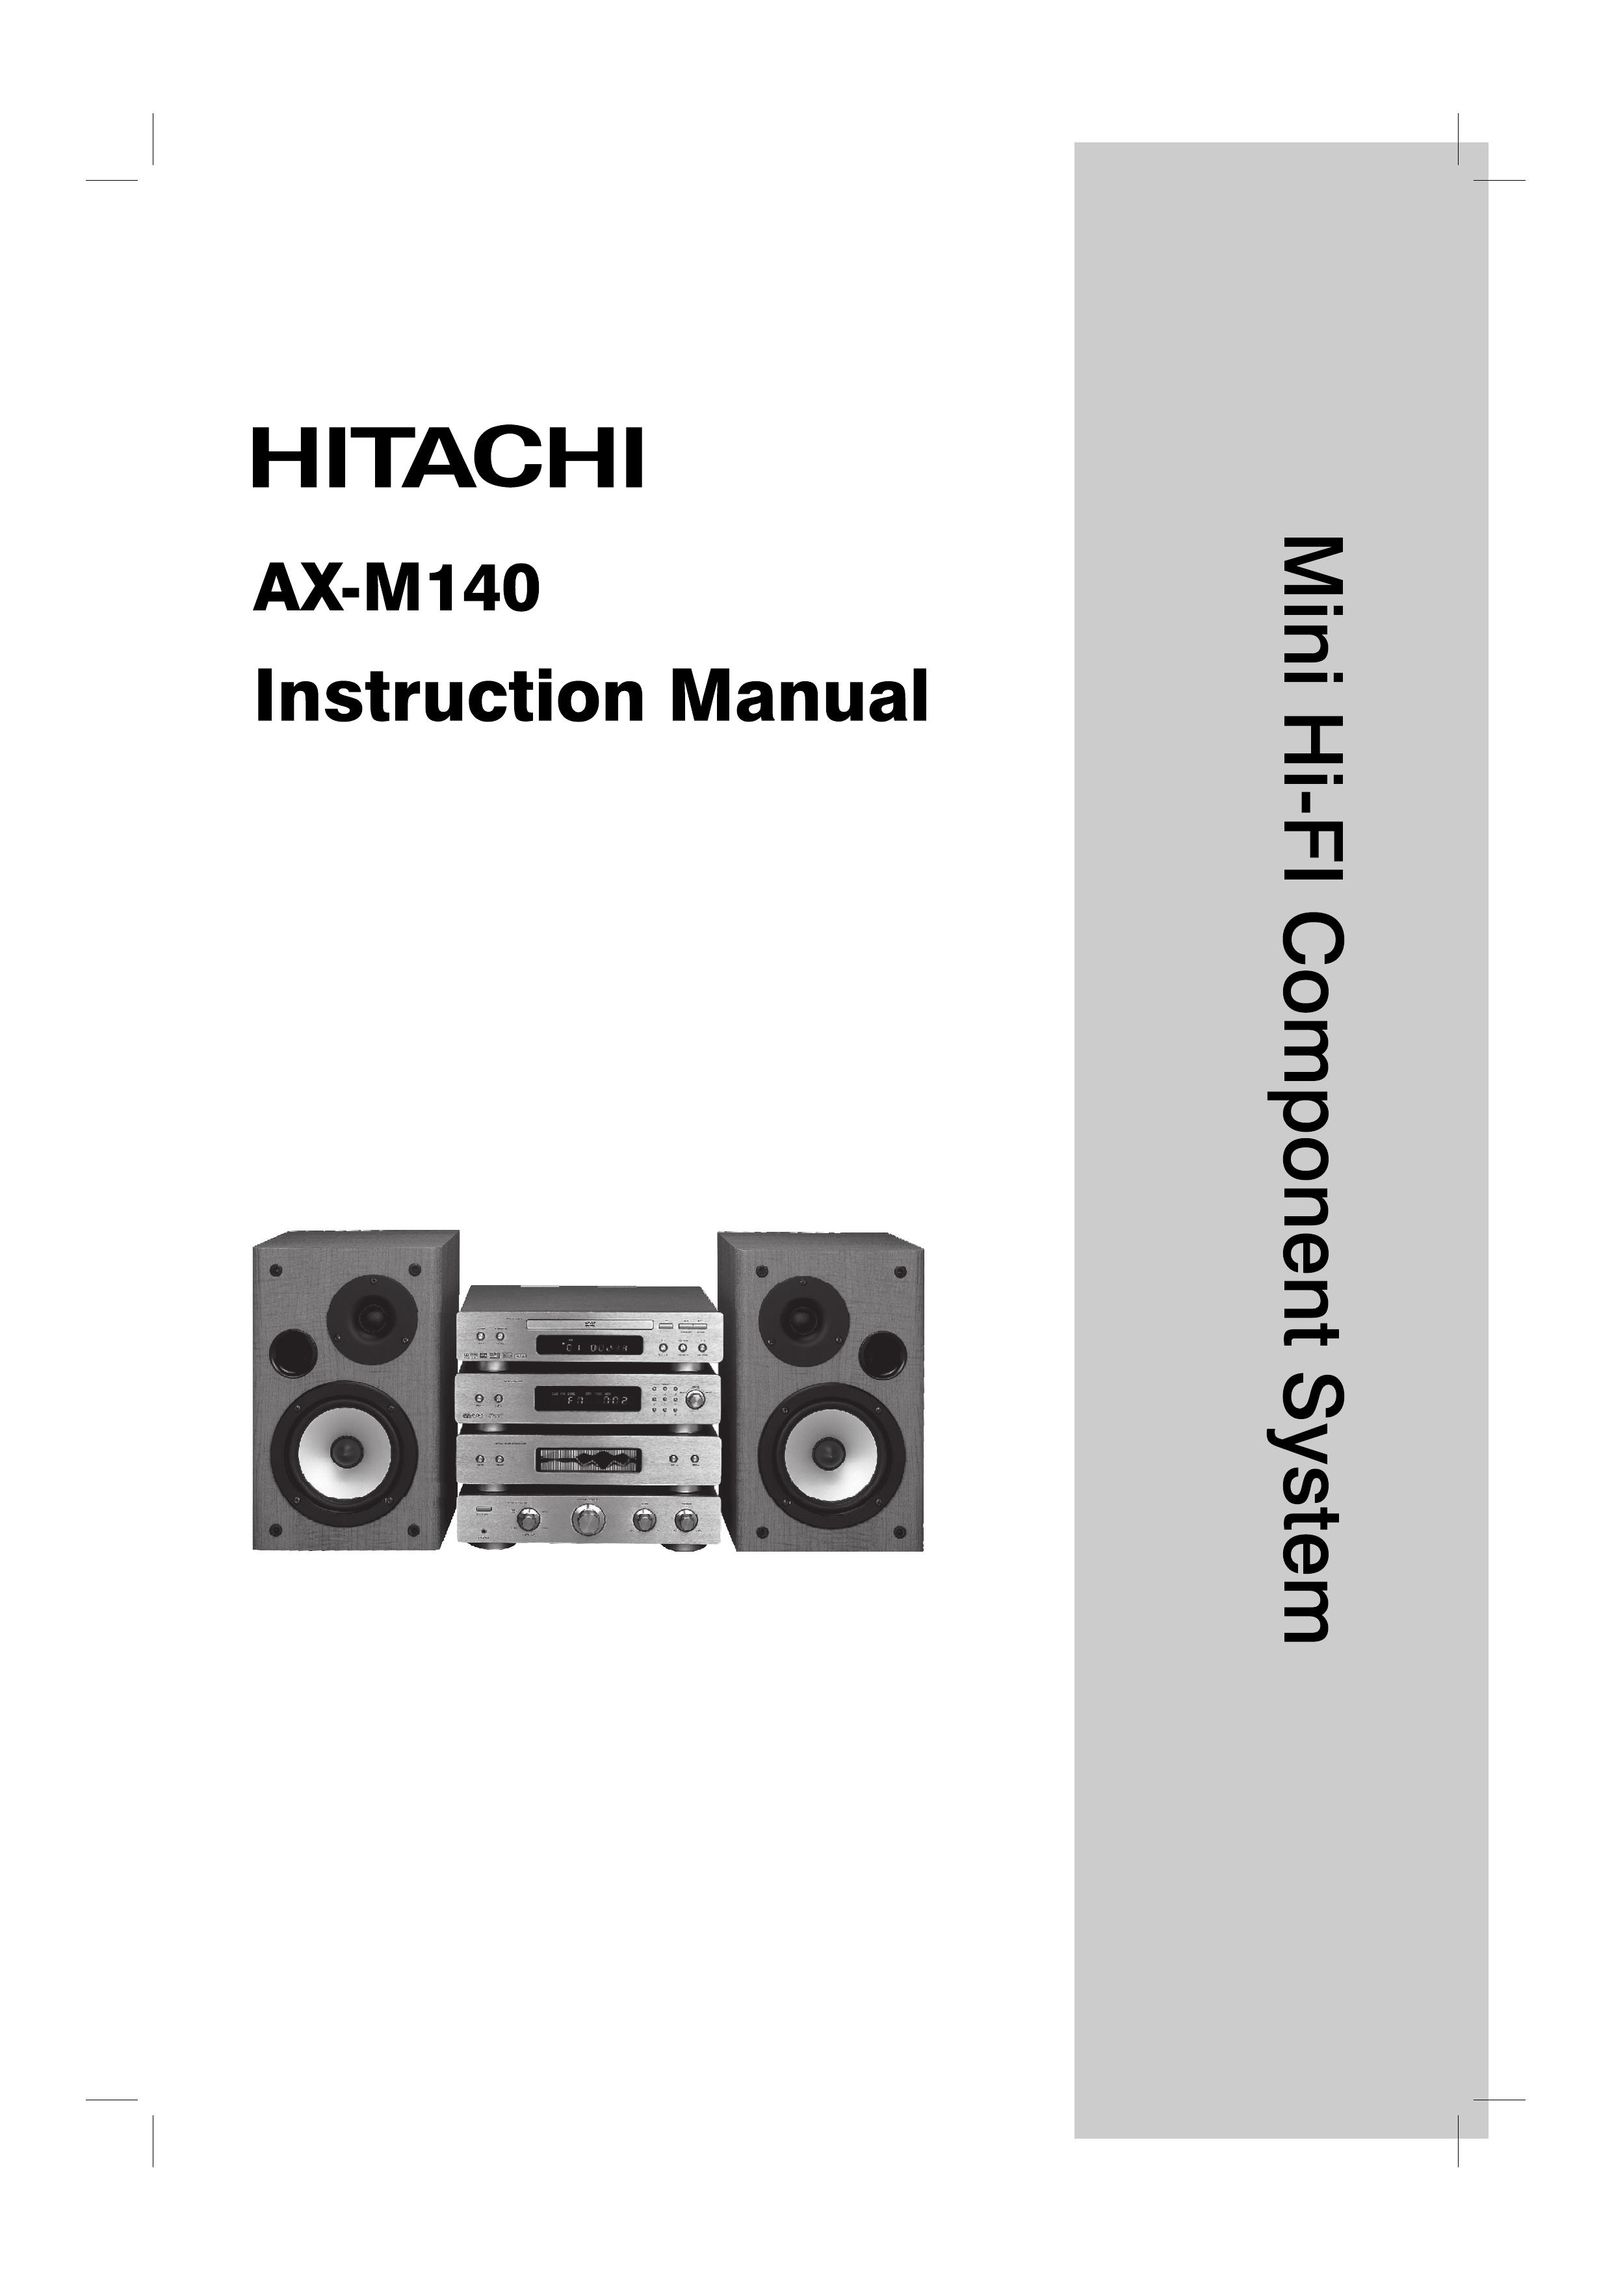 Hitachi AX-M140 Stereo System User Manual